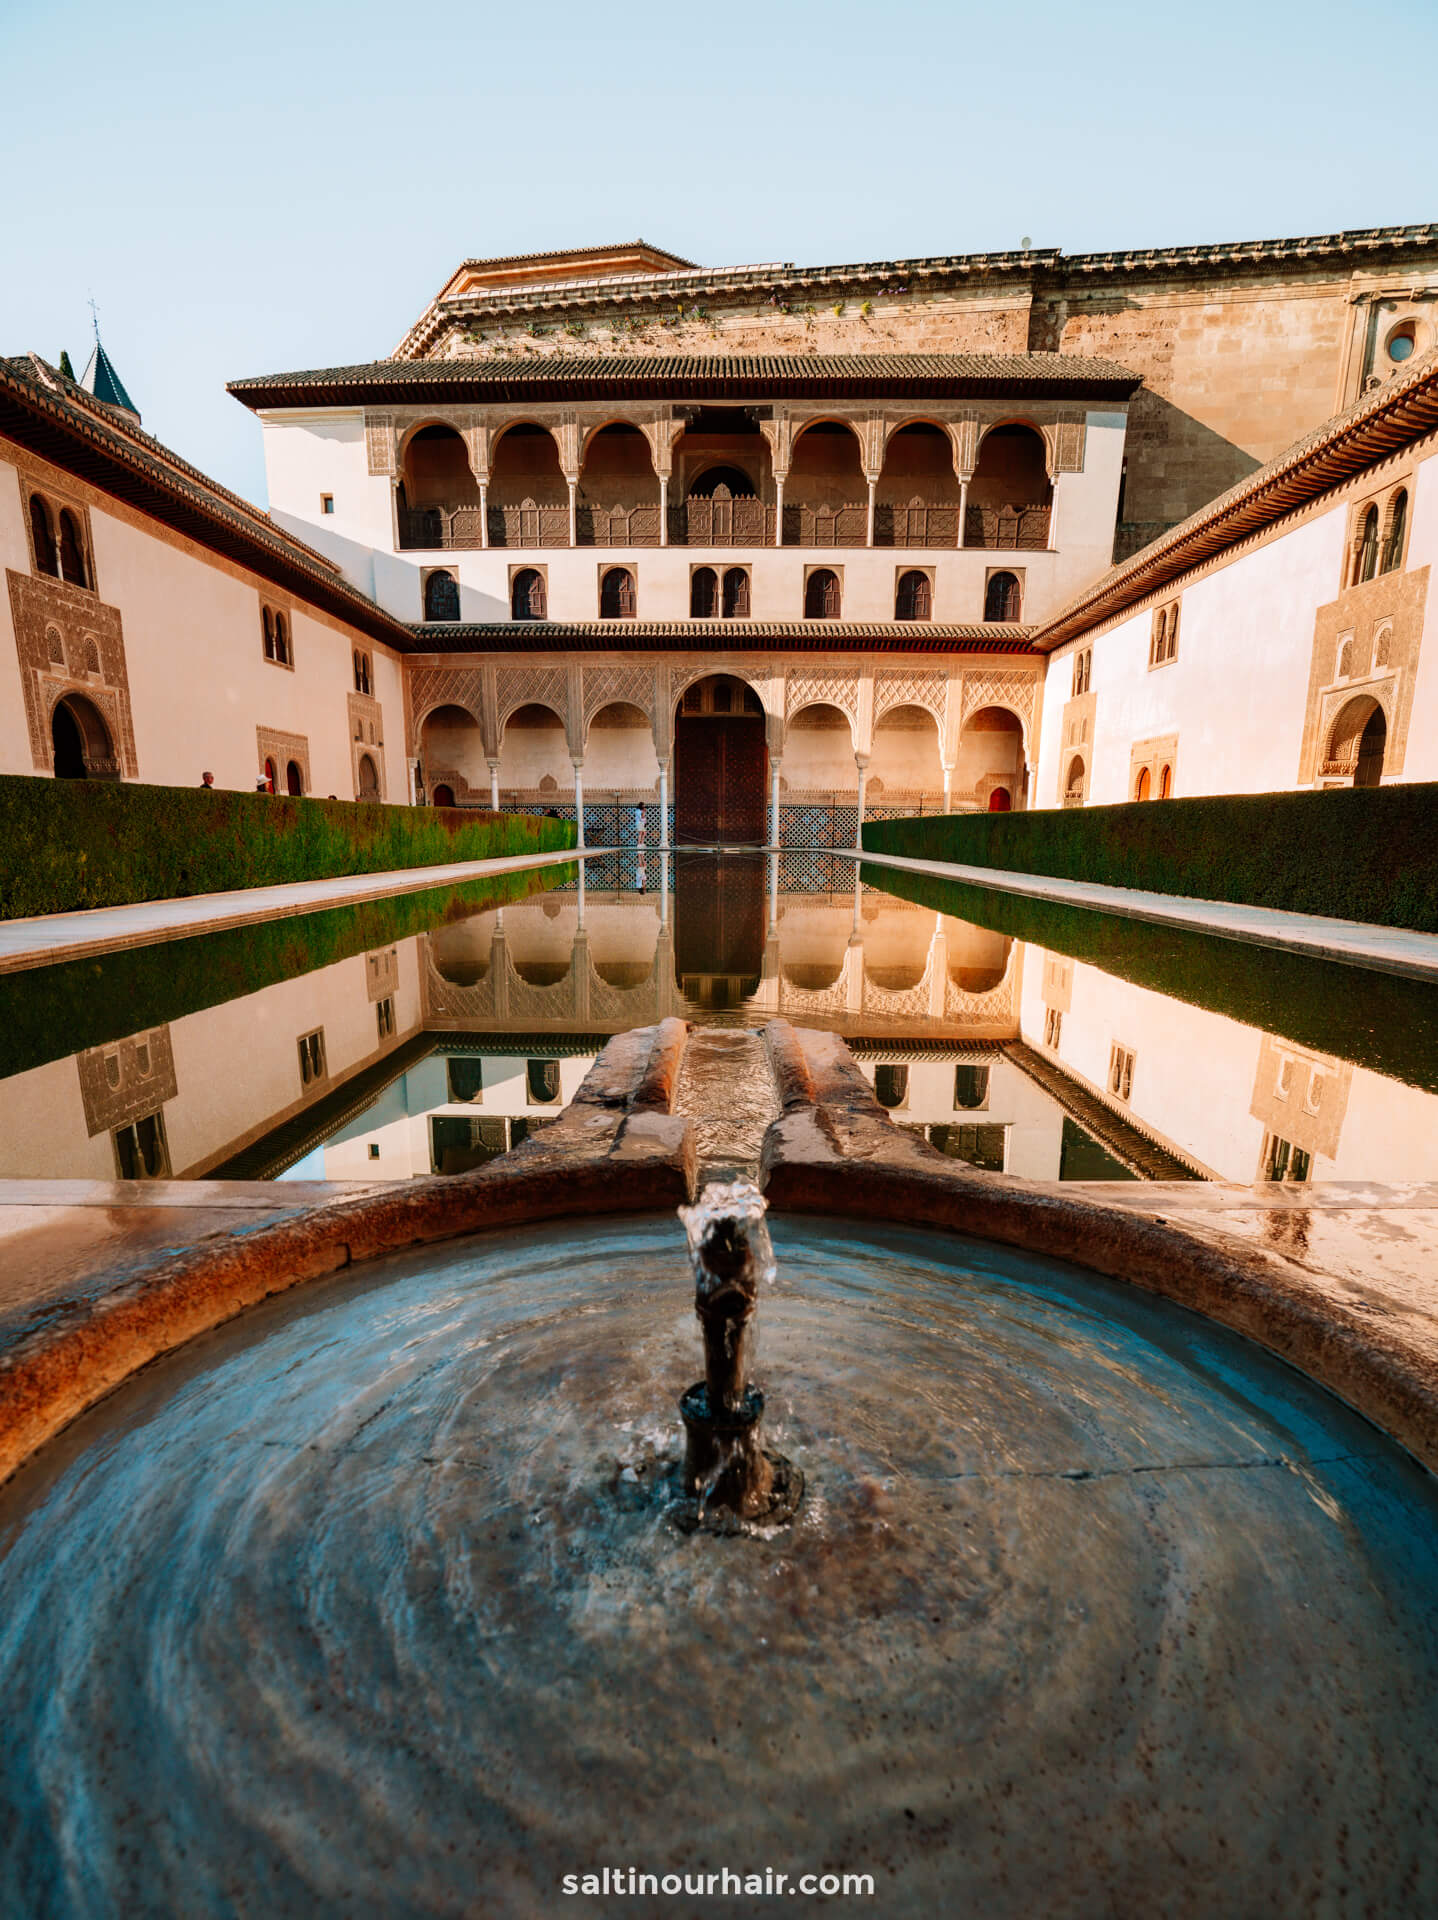  alhambra palace granada spain